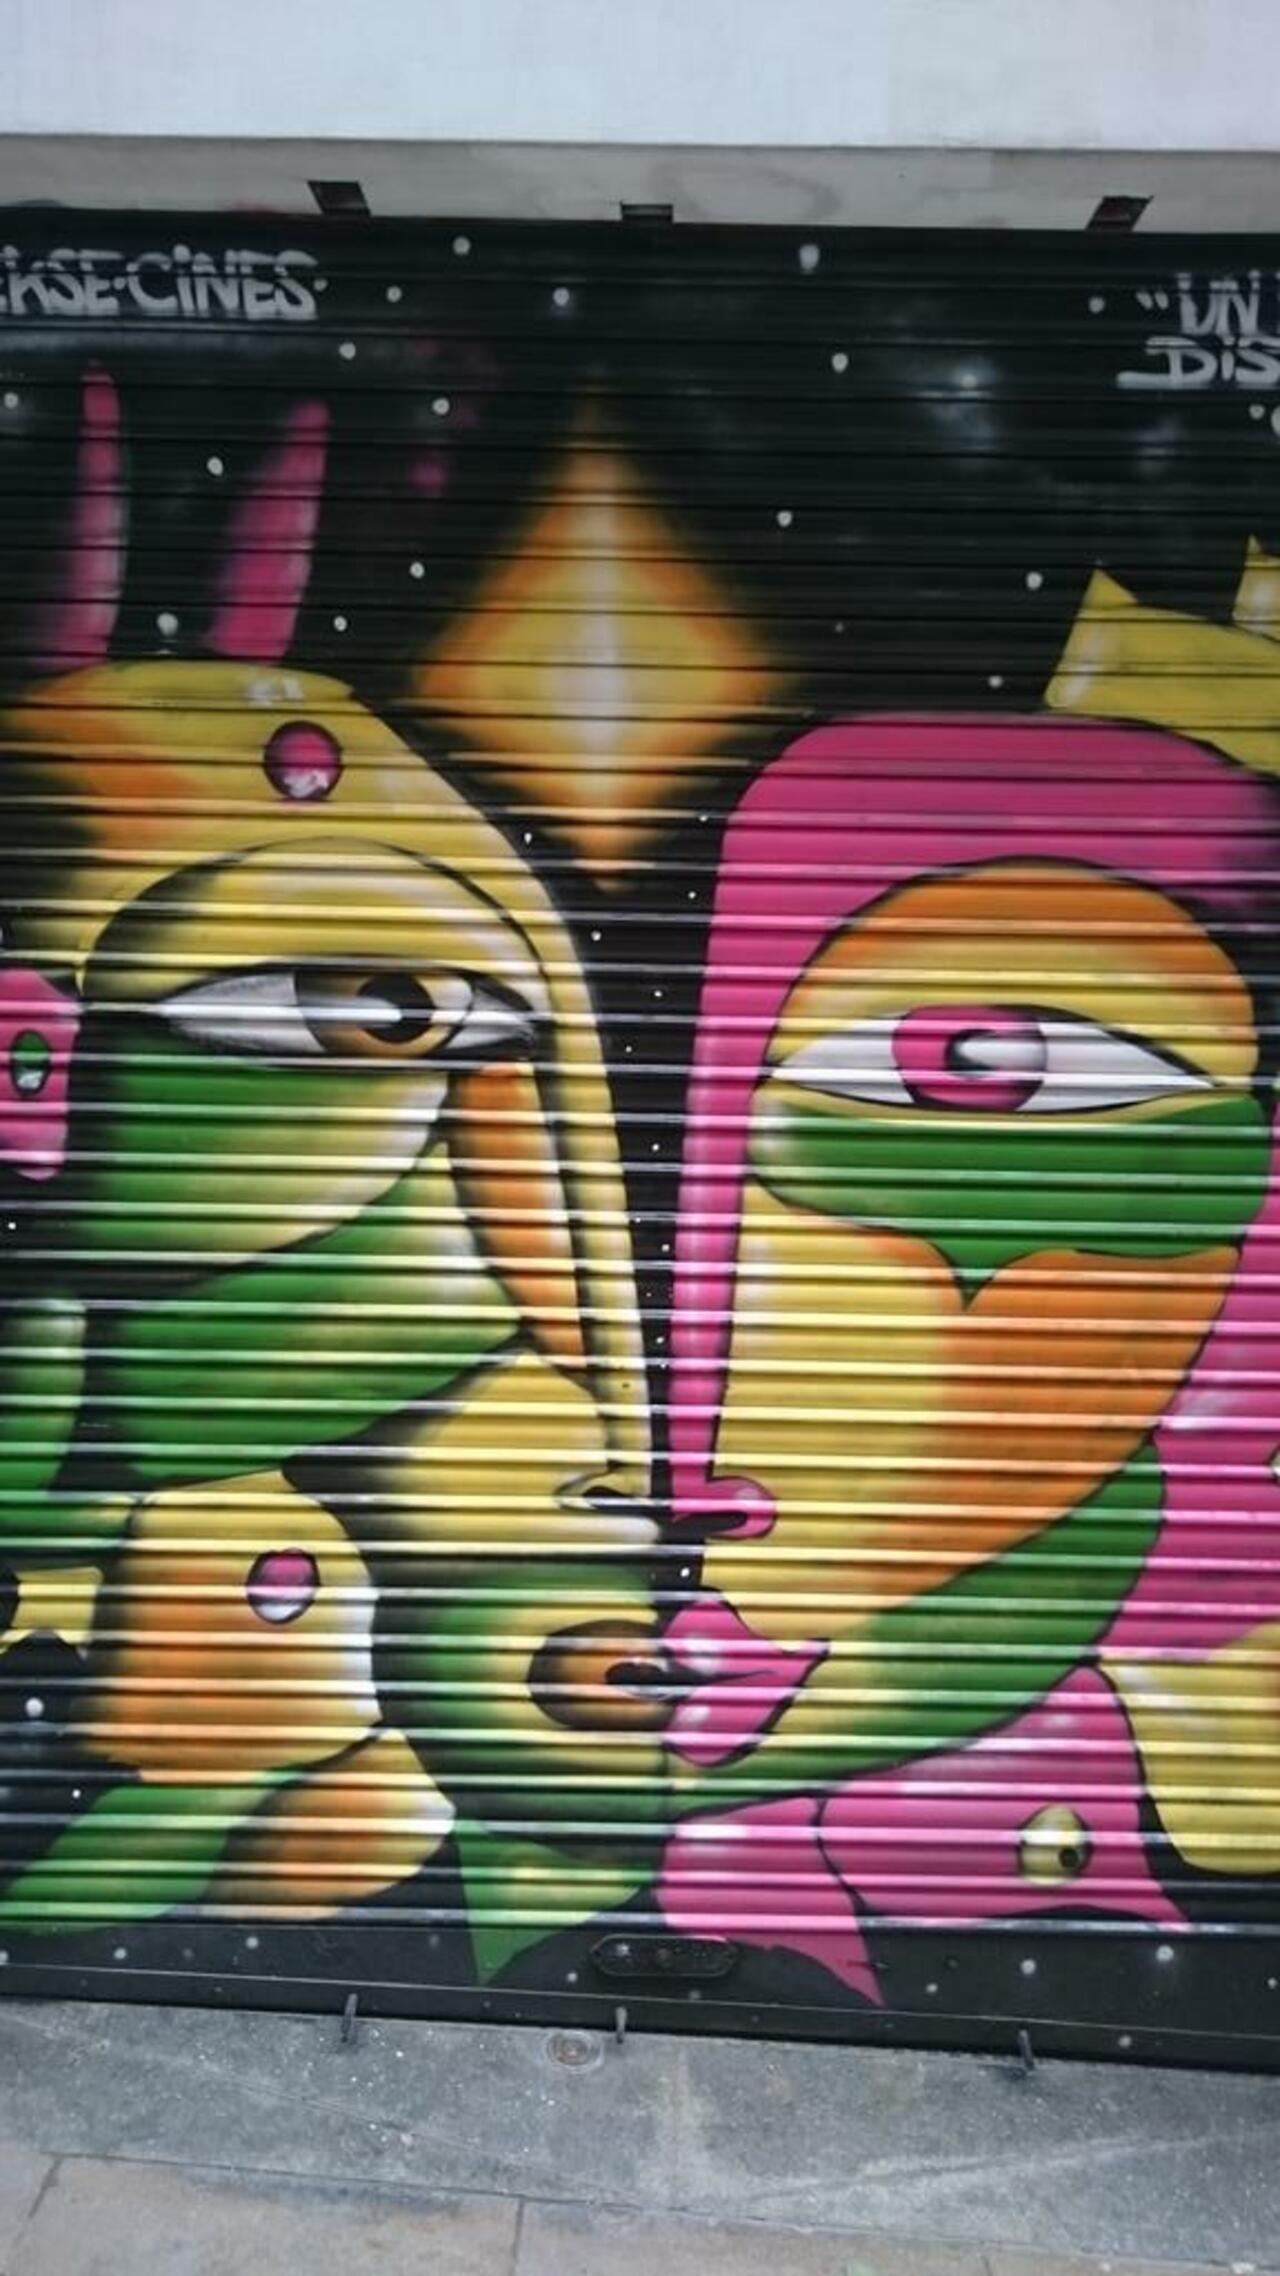 Graffiti in Barcelona #Barca #streetart #graffiti #urbanart https://t.co/8oKxmdutJU